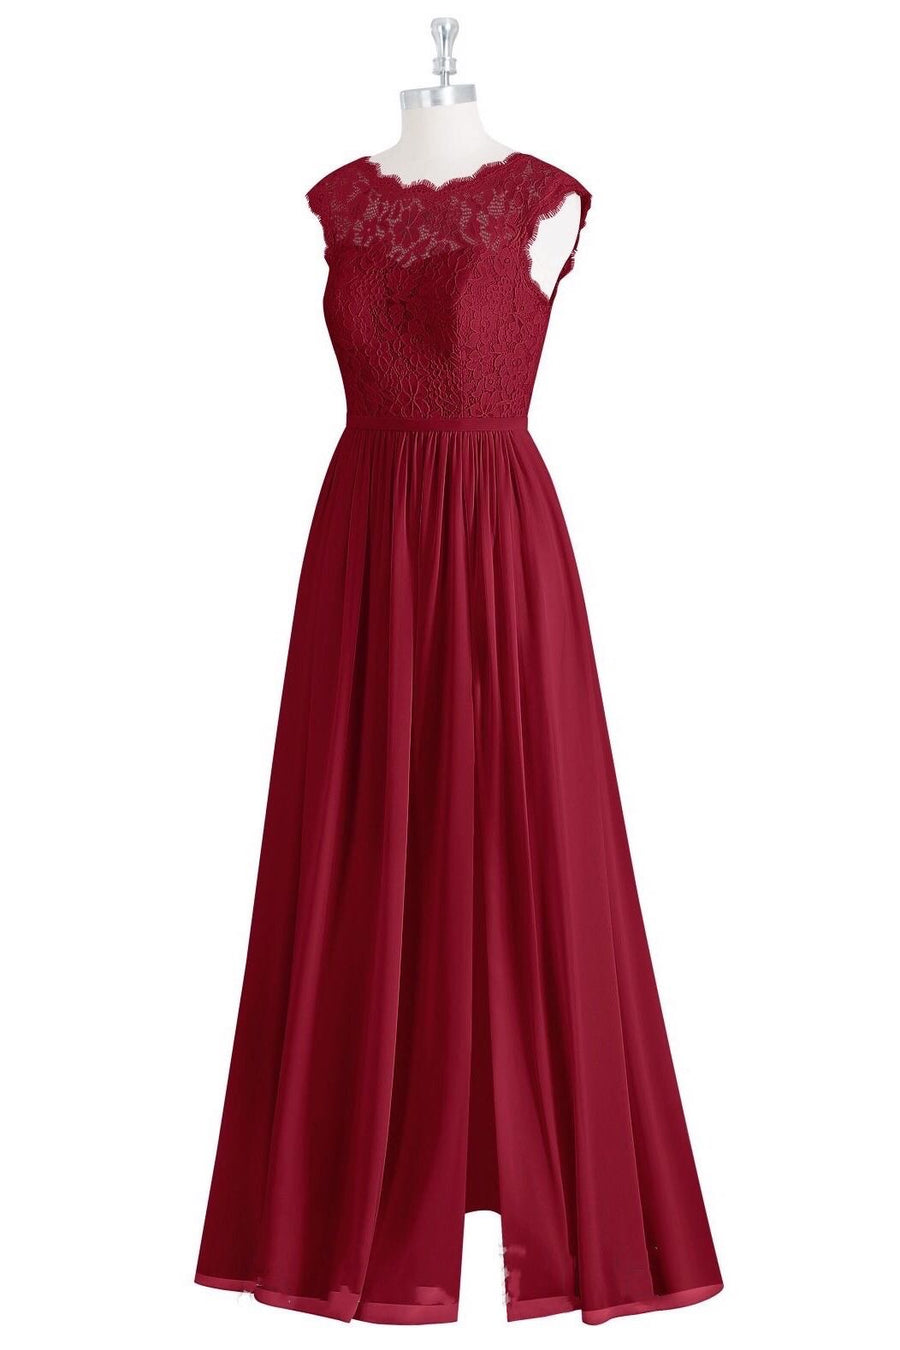 Wine Red Crew Neck Cap Sleeve Long Bridesmaid Dress with Slit